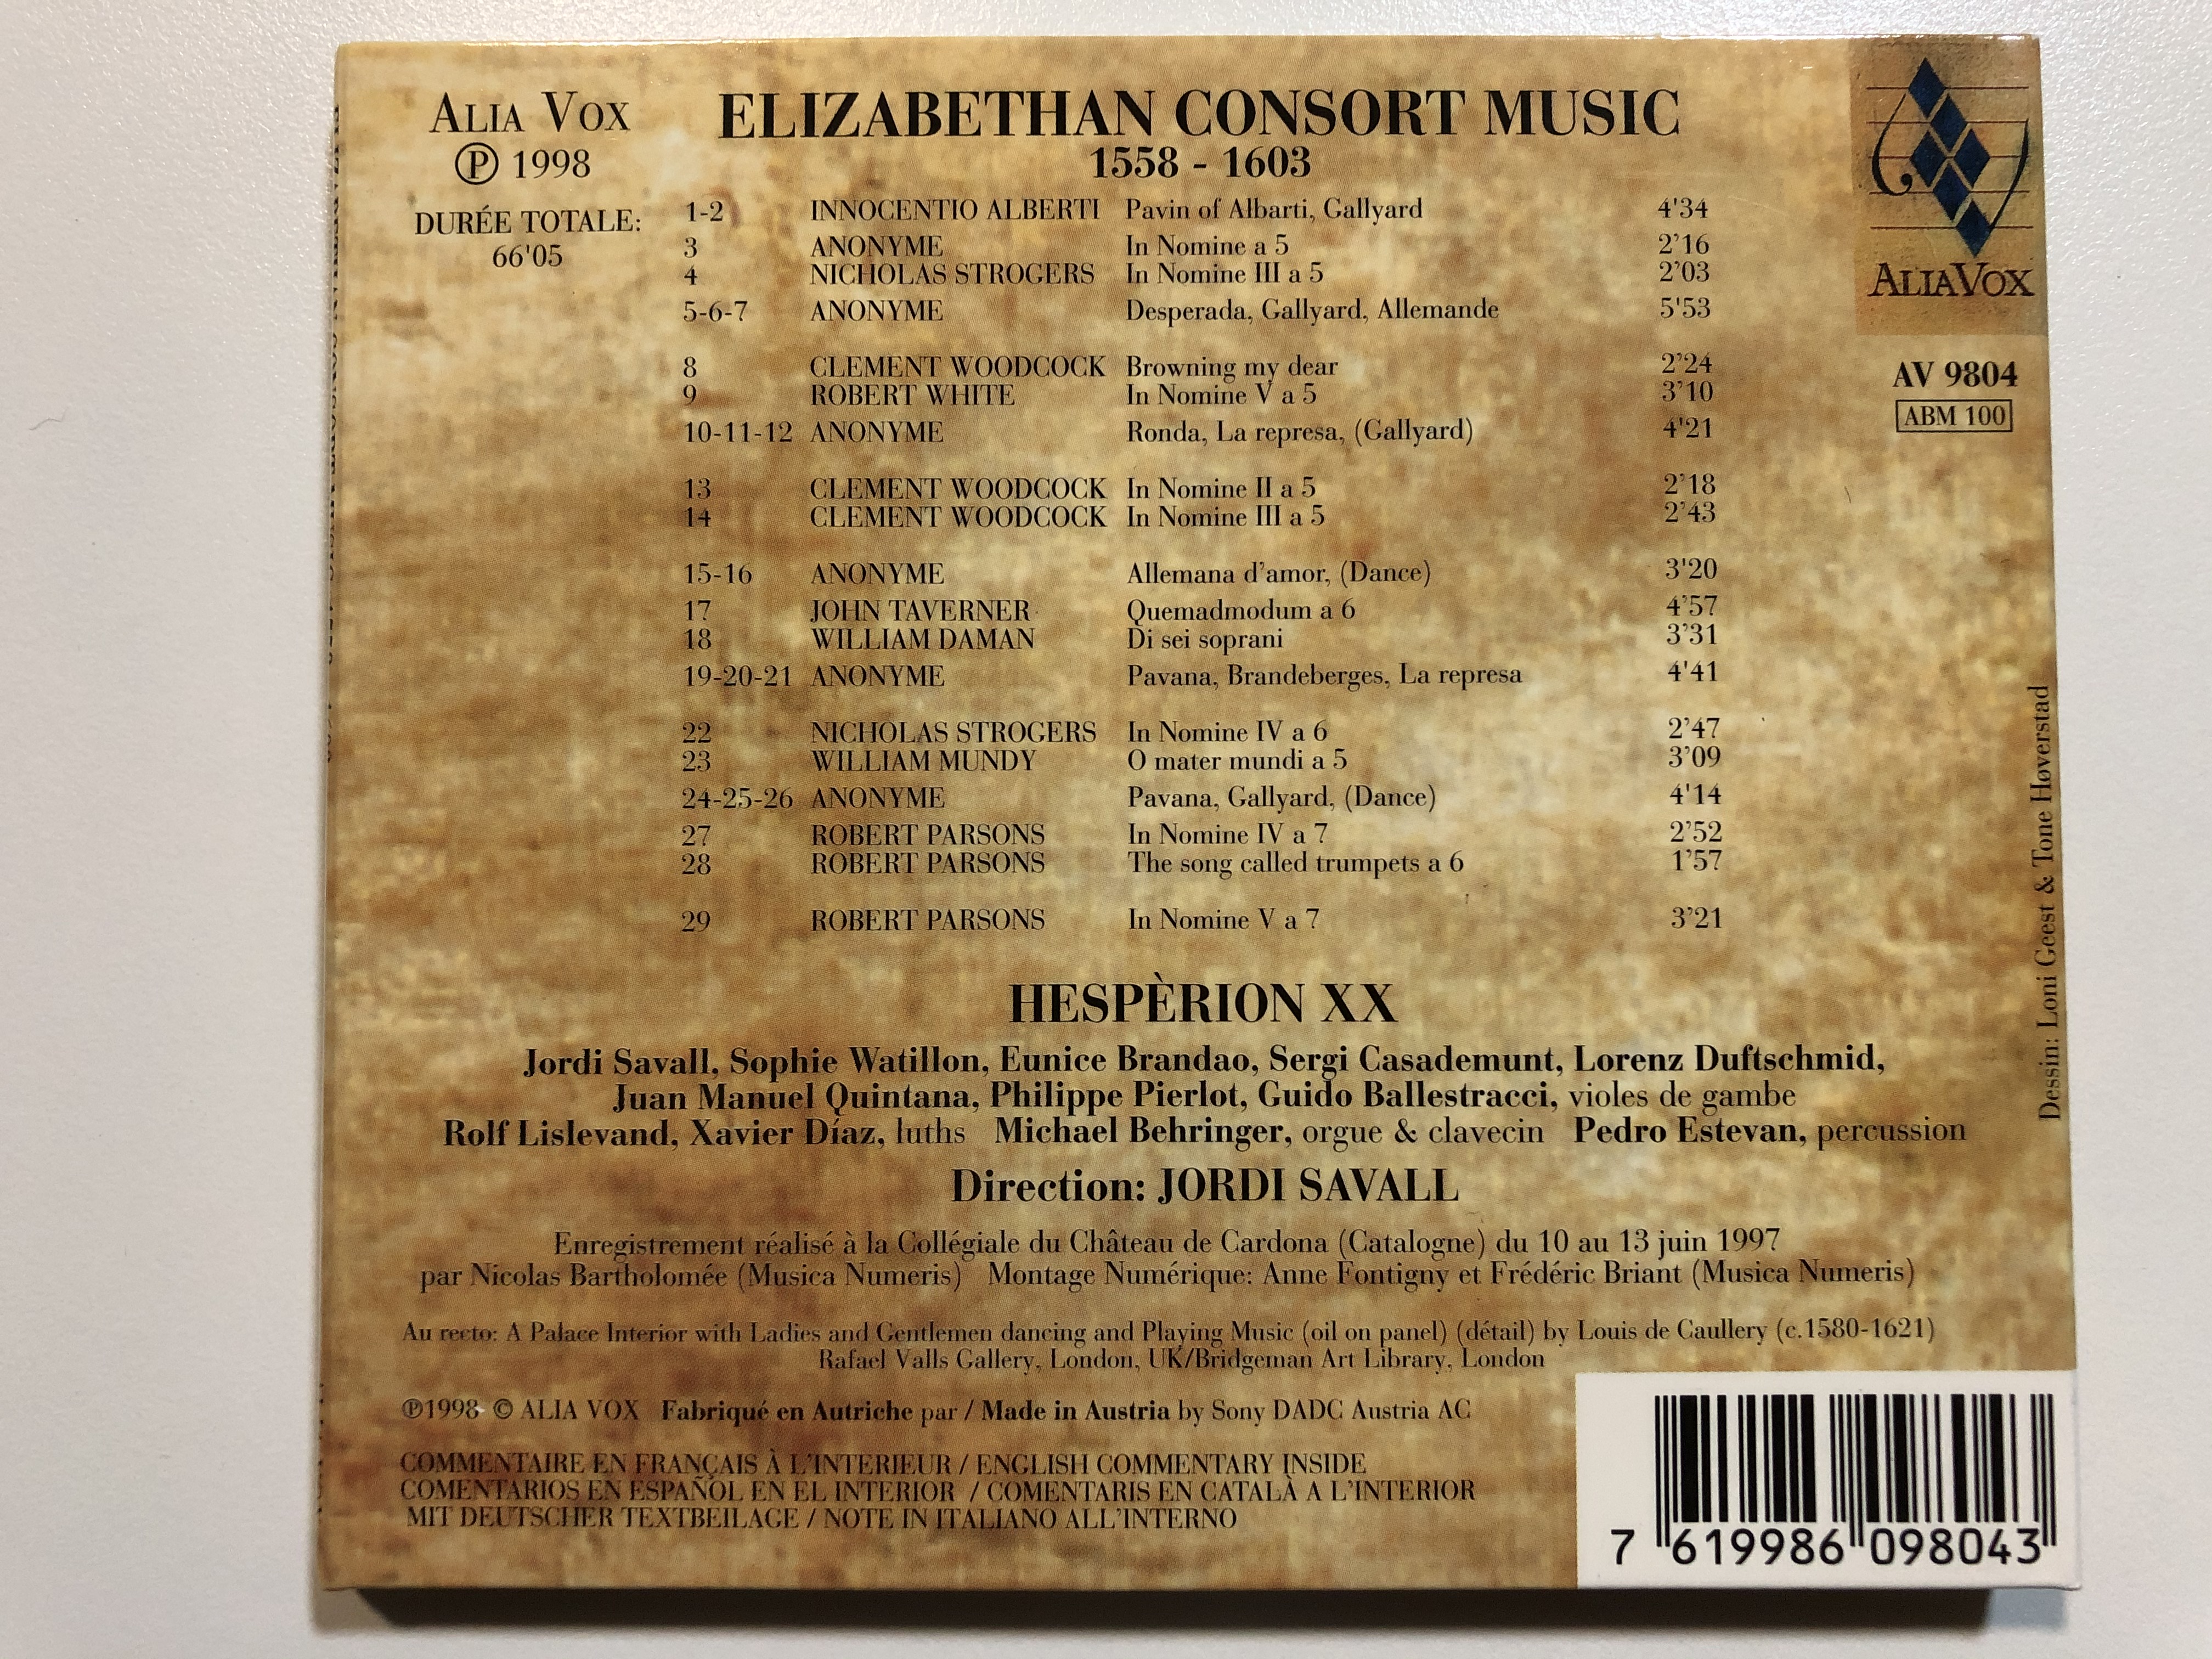 elizabethan-consort-music-1558-1603-alberti-parsons-strogers-taverner-white-woodcock-anonymes-hesp-rion-xx-jordi-savall-alia-vox-audio-cd-1998-av9804-10-.jpg